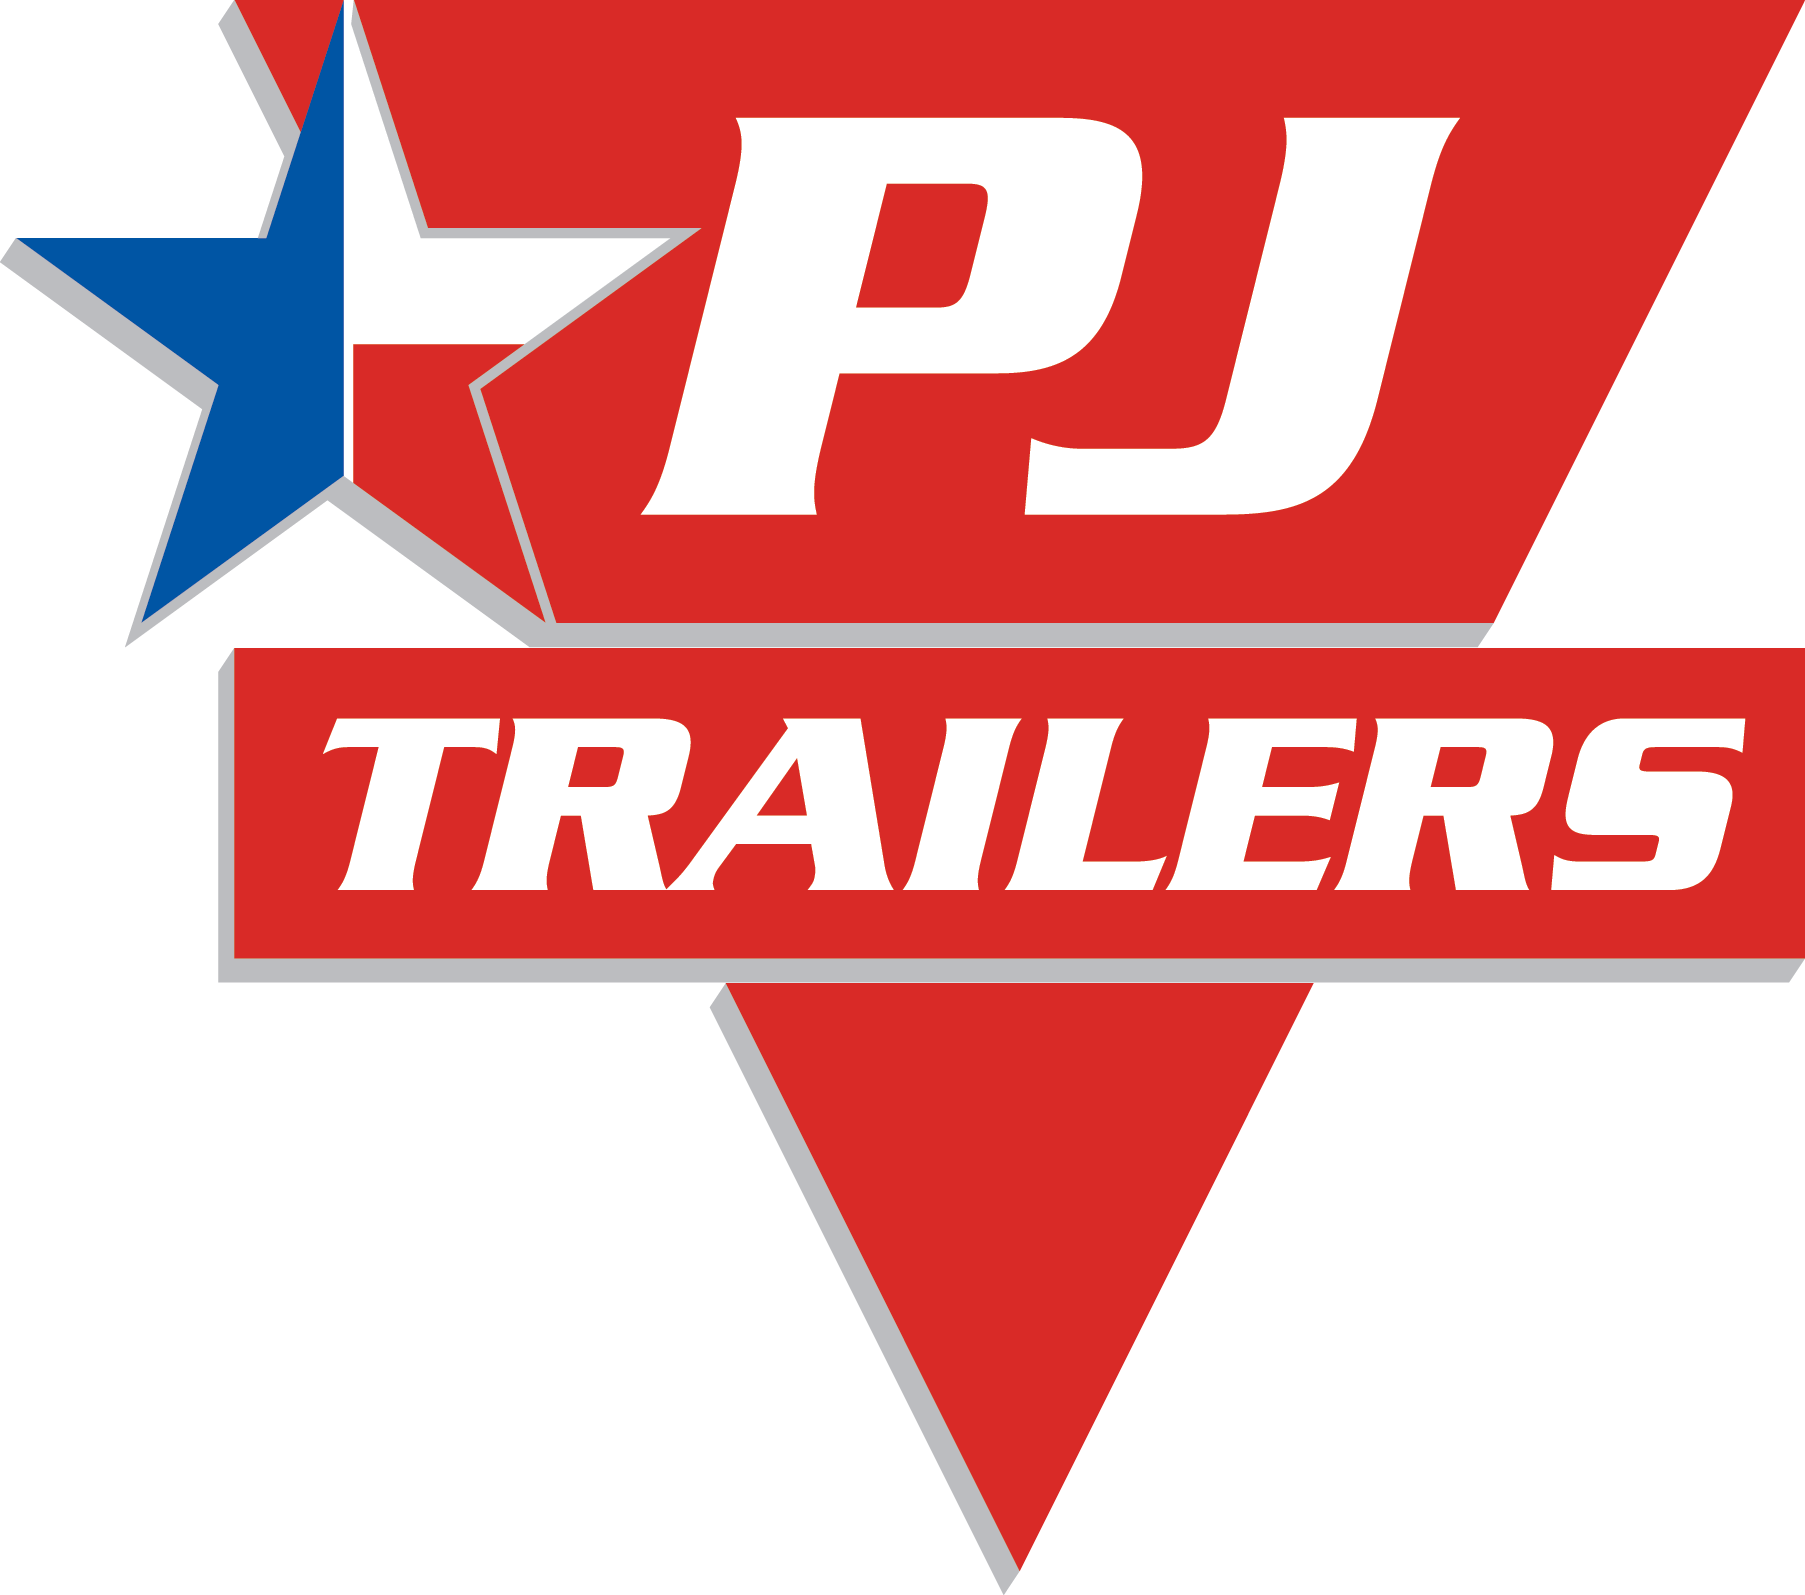 Trailers Logo - PJ Trailers Logo Usage and Downloads